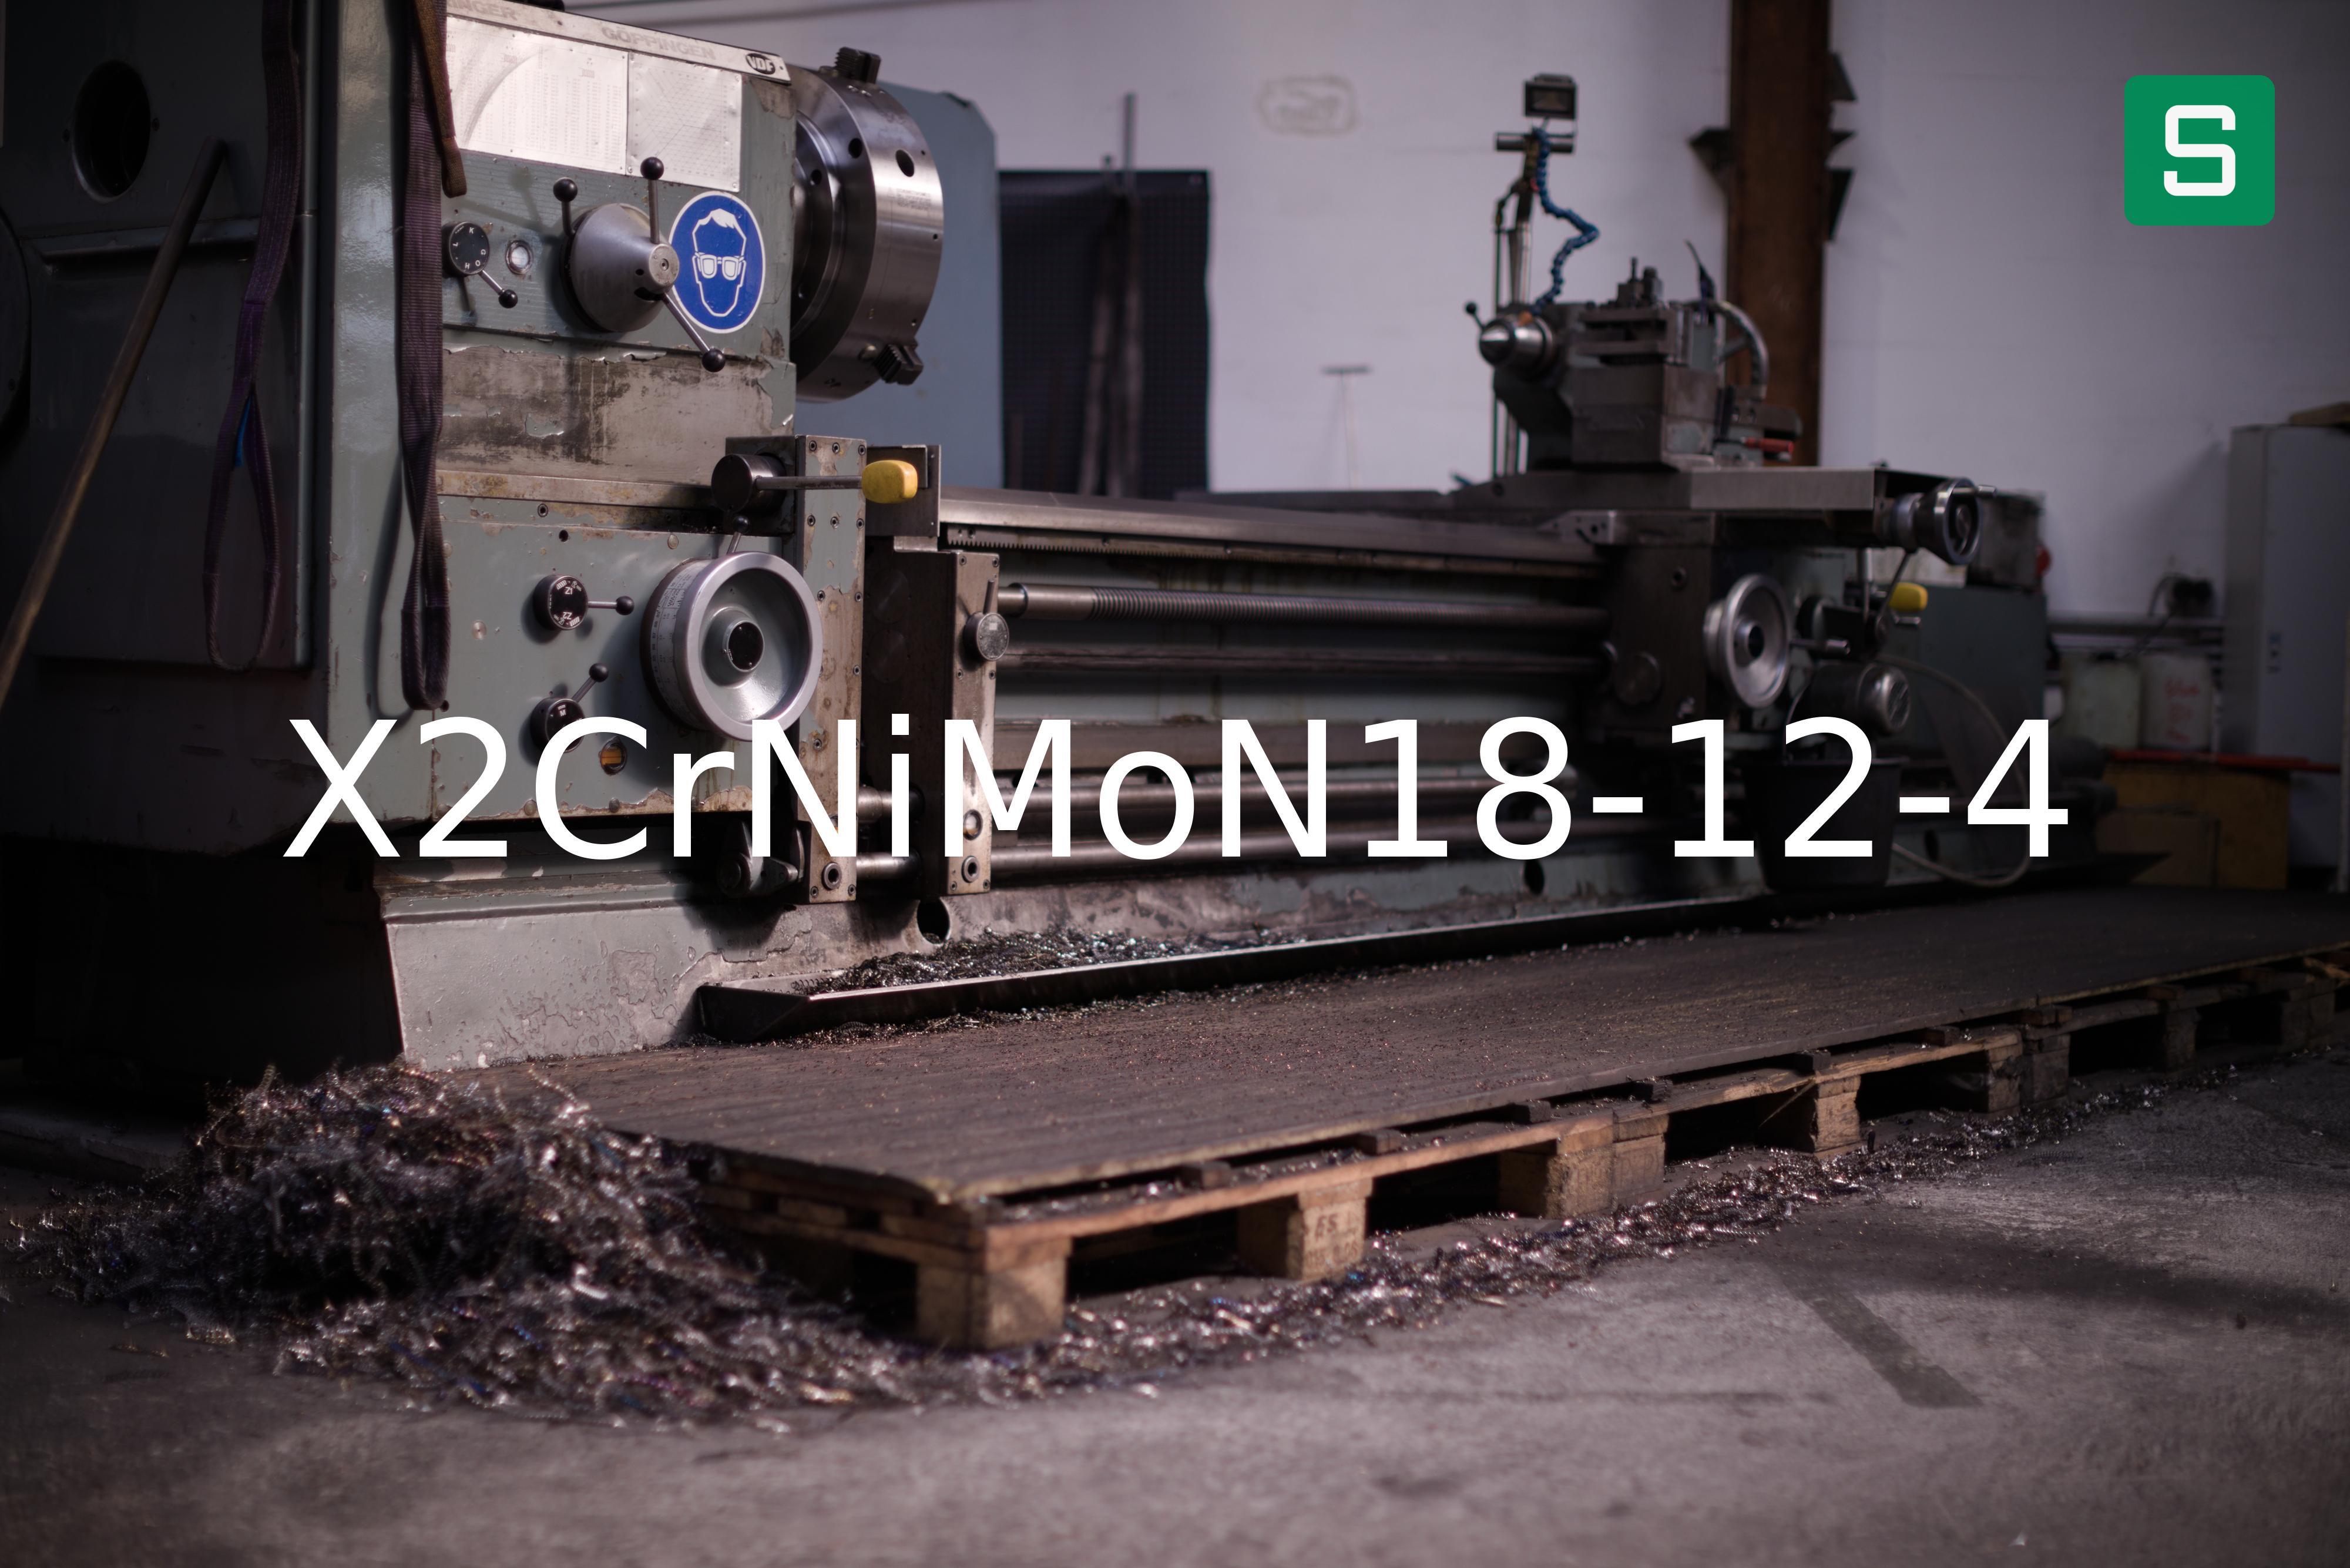 Steel Material: X2CrNiMoN18-12-4